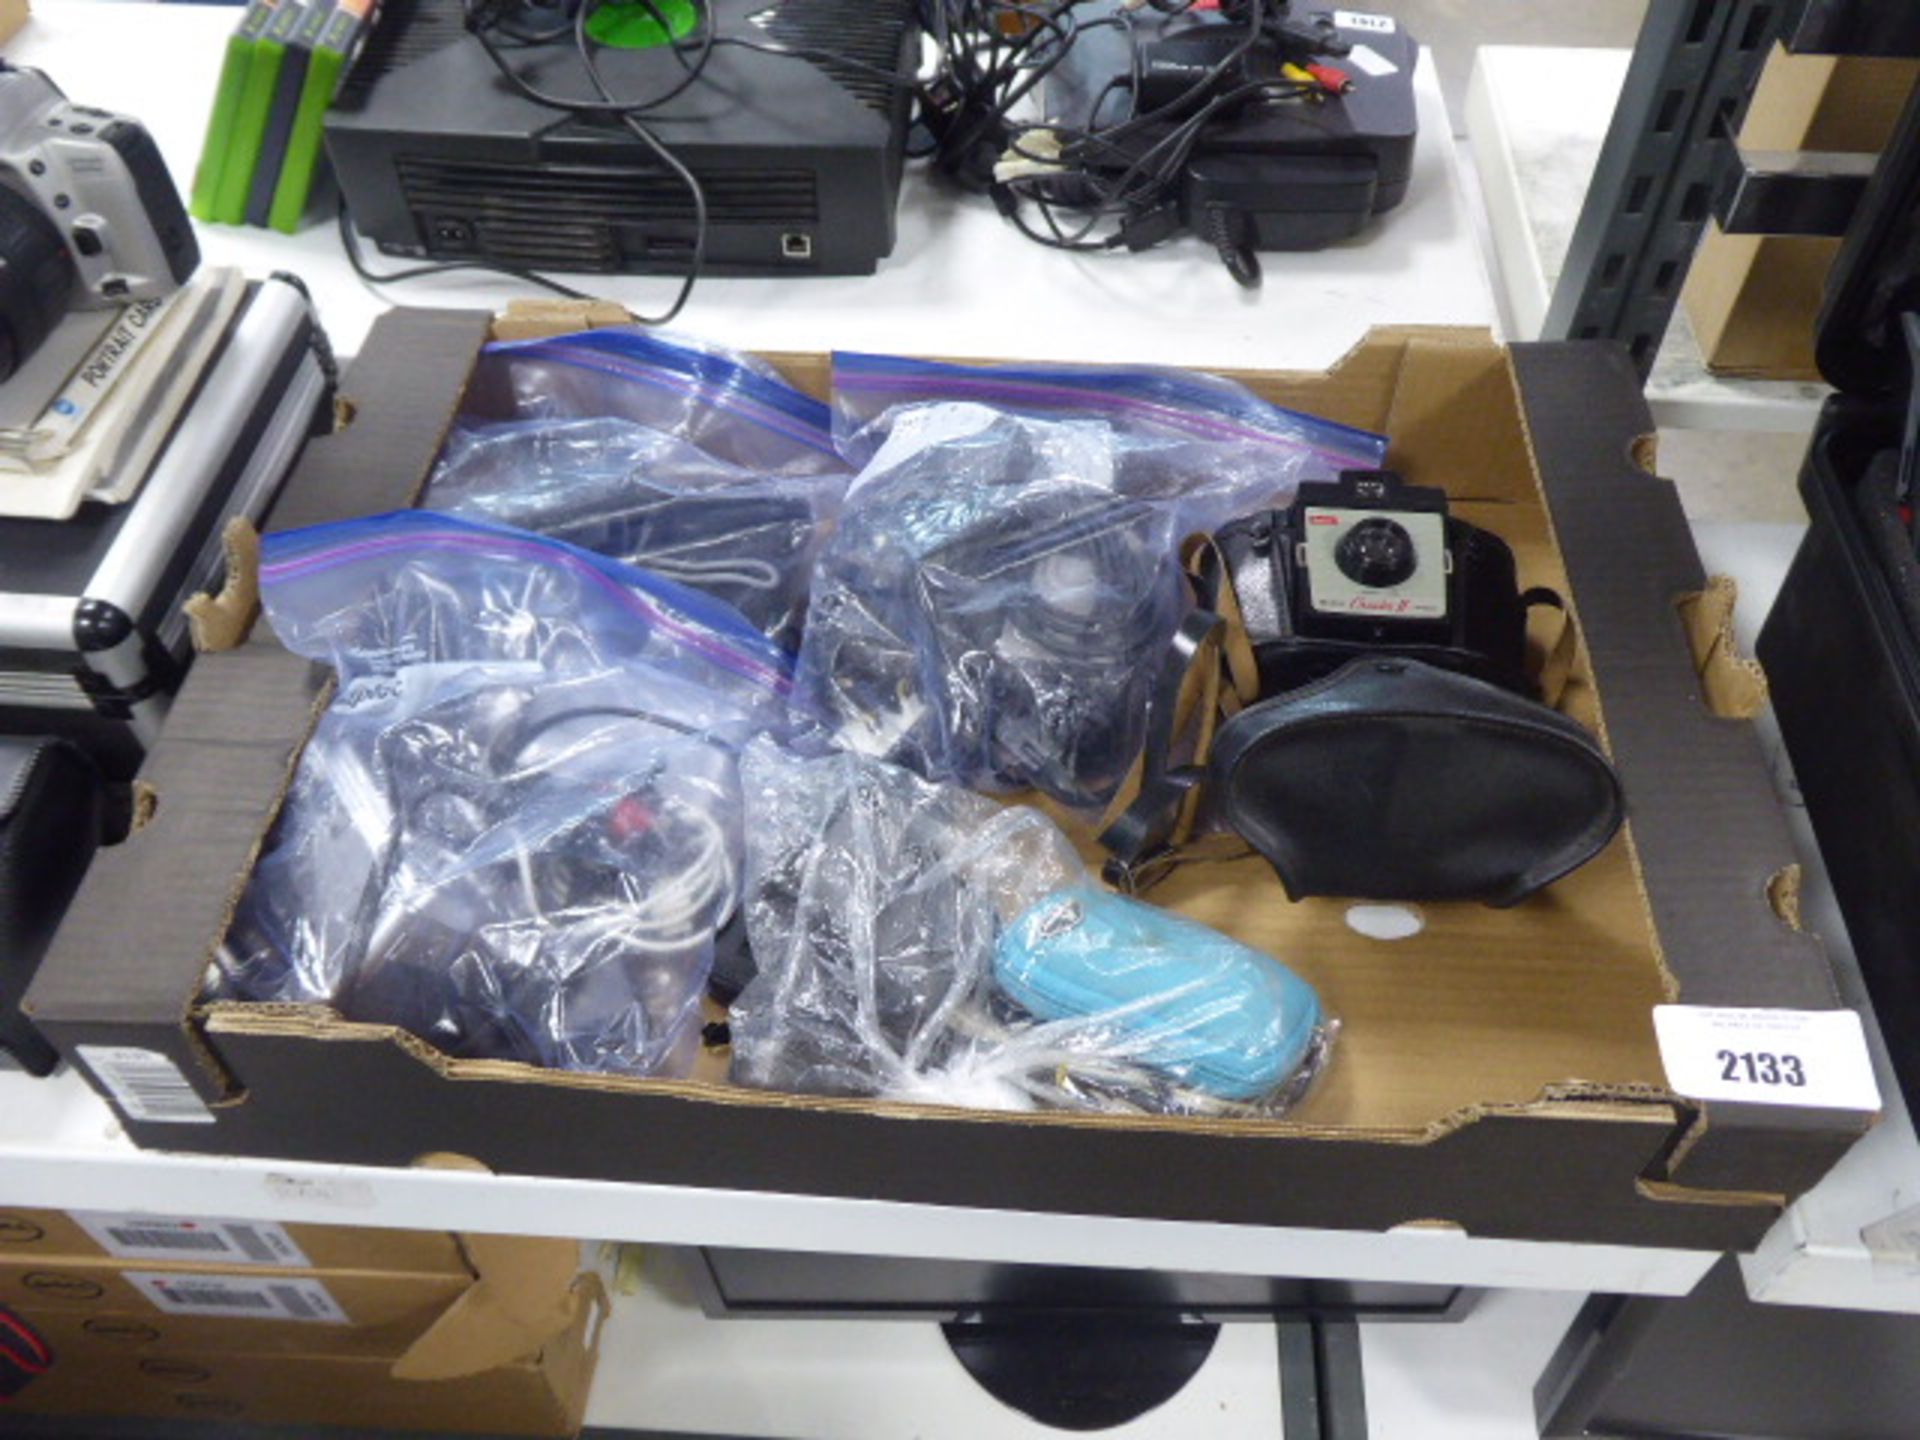 Cardboard tray with various digital camera equipment and a Kodak Cresta II box camera